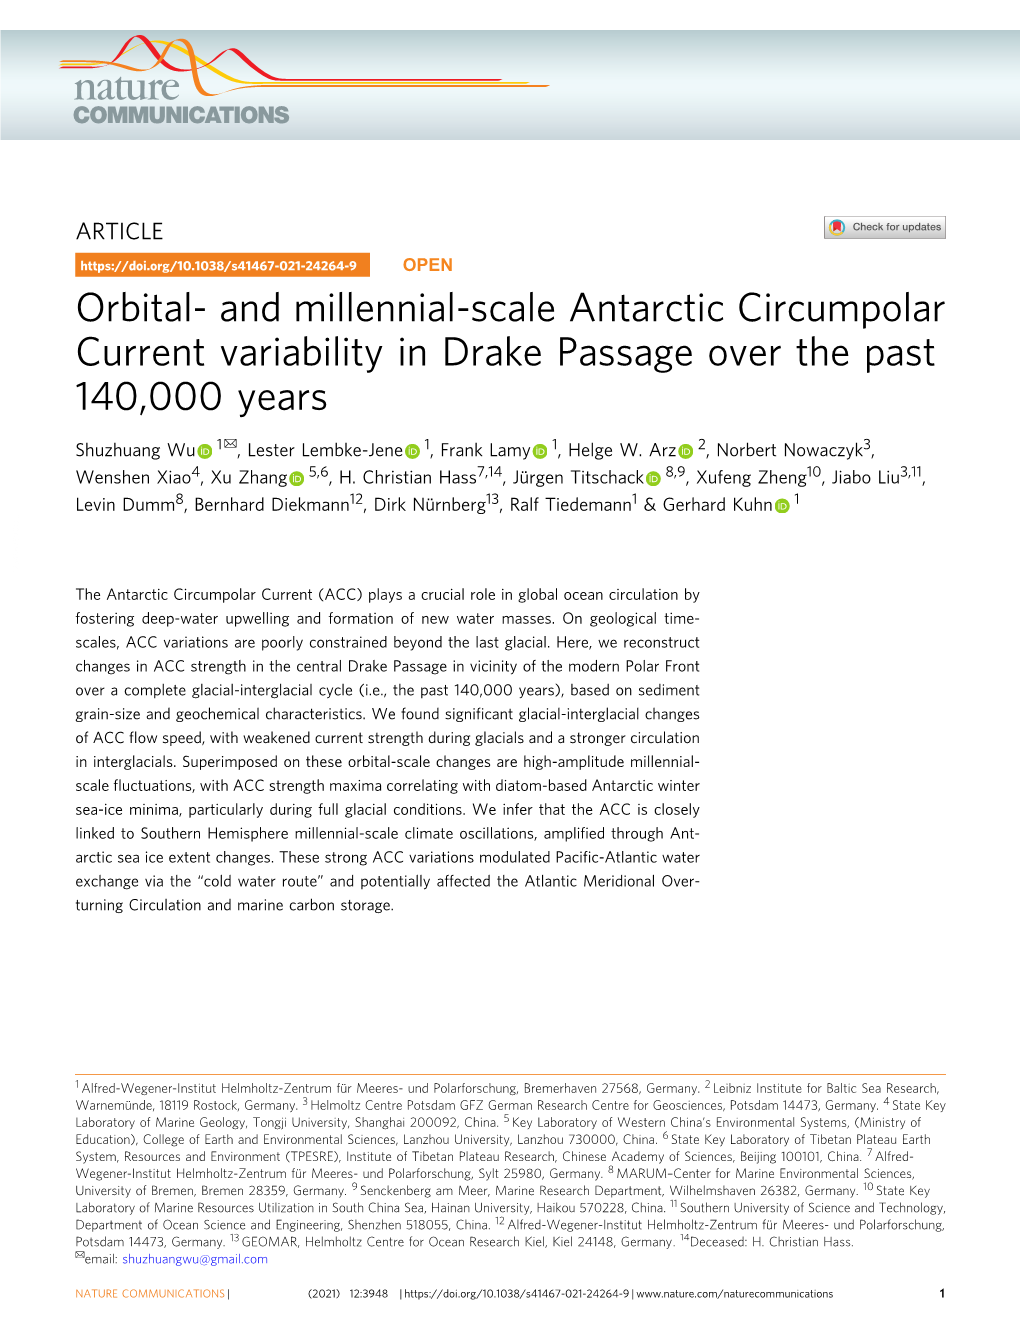 Orbital- and Millennial-Scale Antarctic Circumpolar Current Variability In